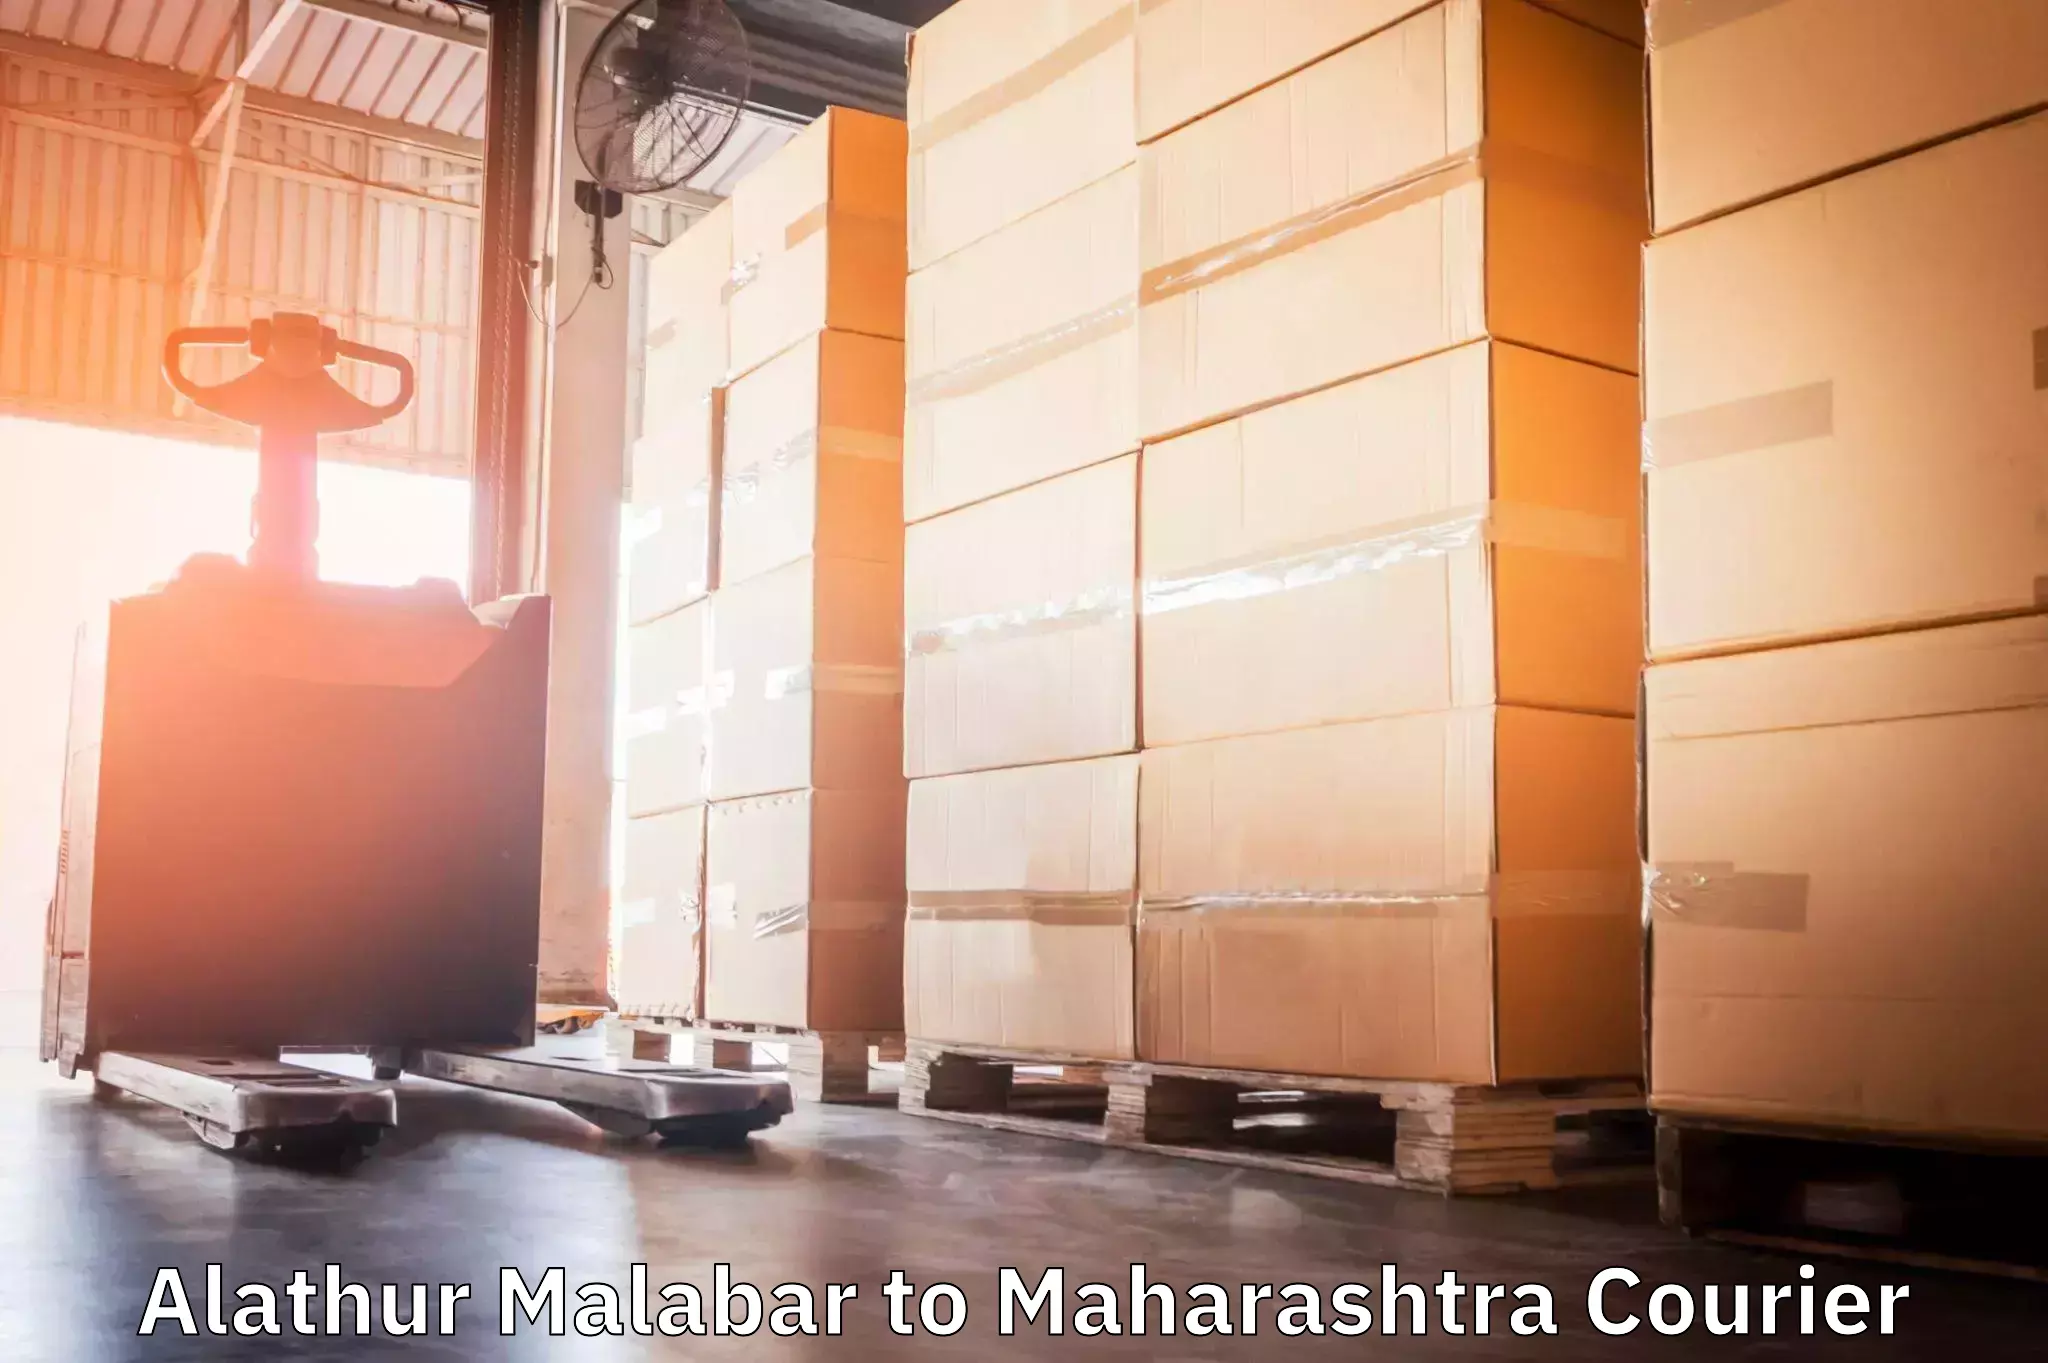 Courier service comparison Alathur Malabar to Pimpalgaon